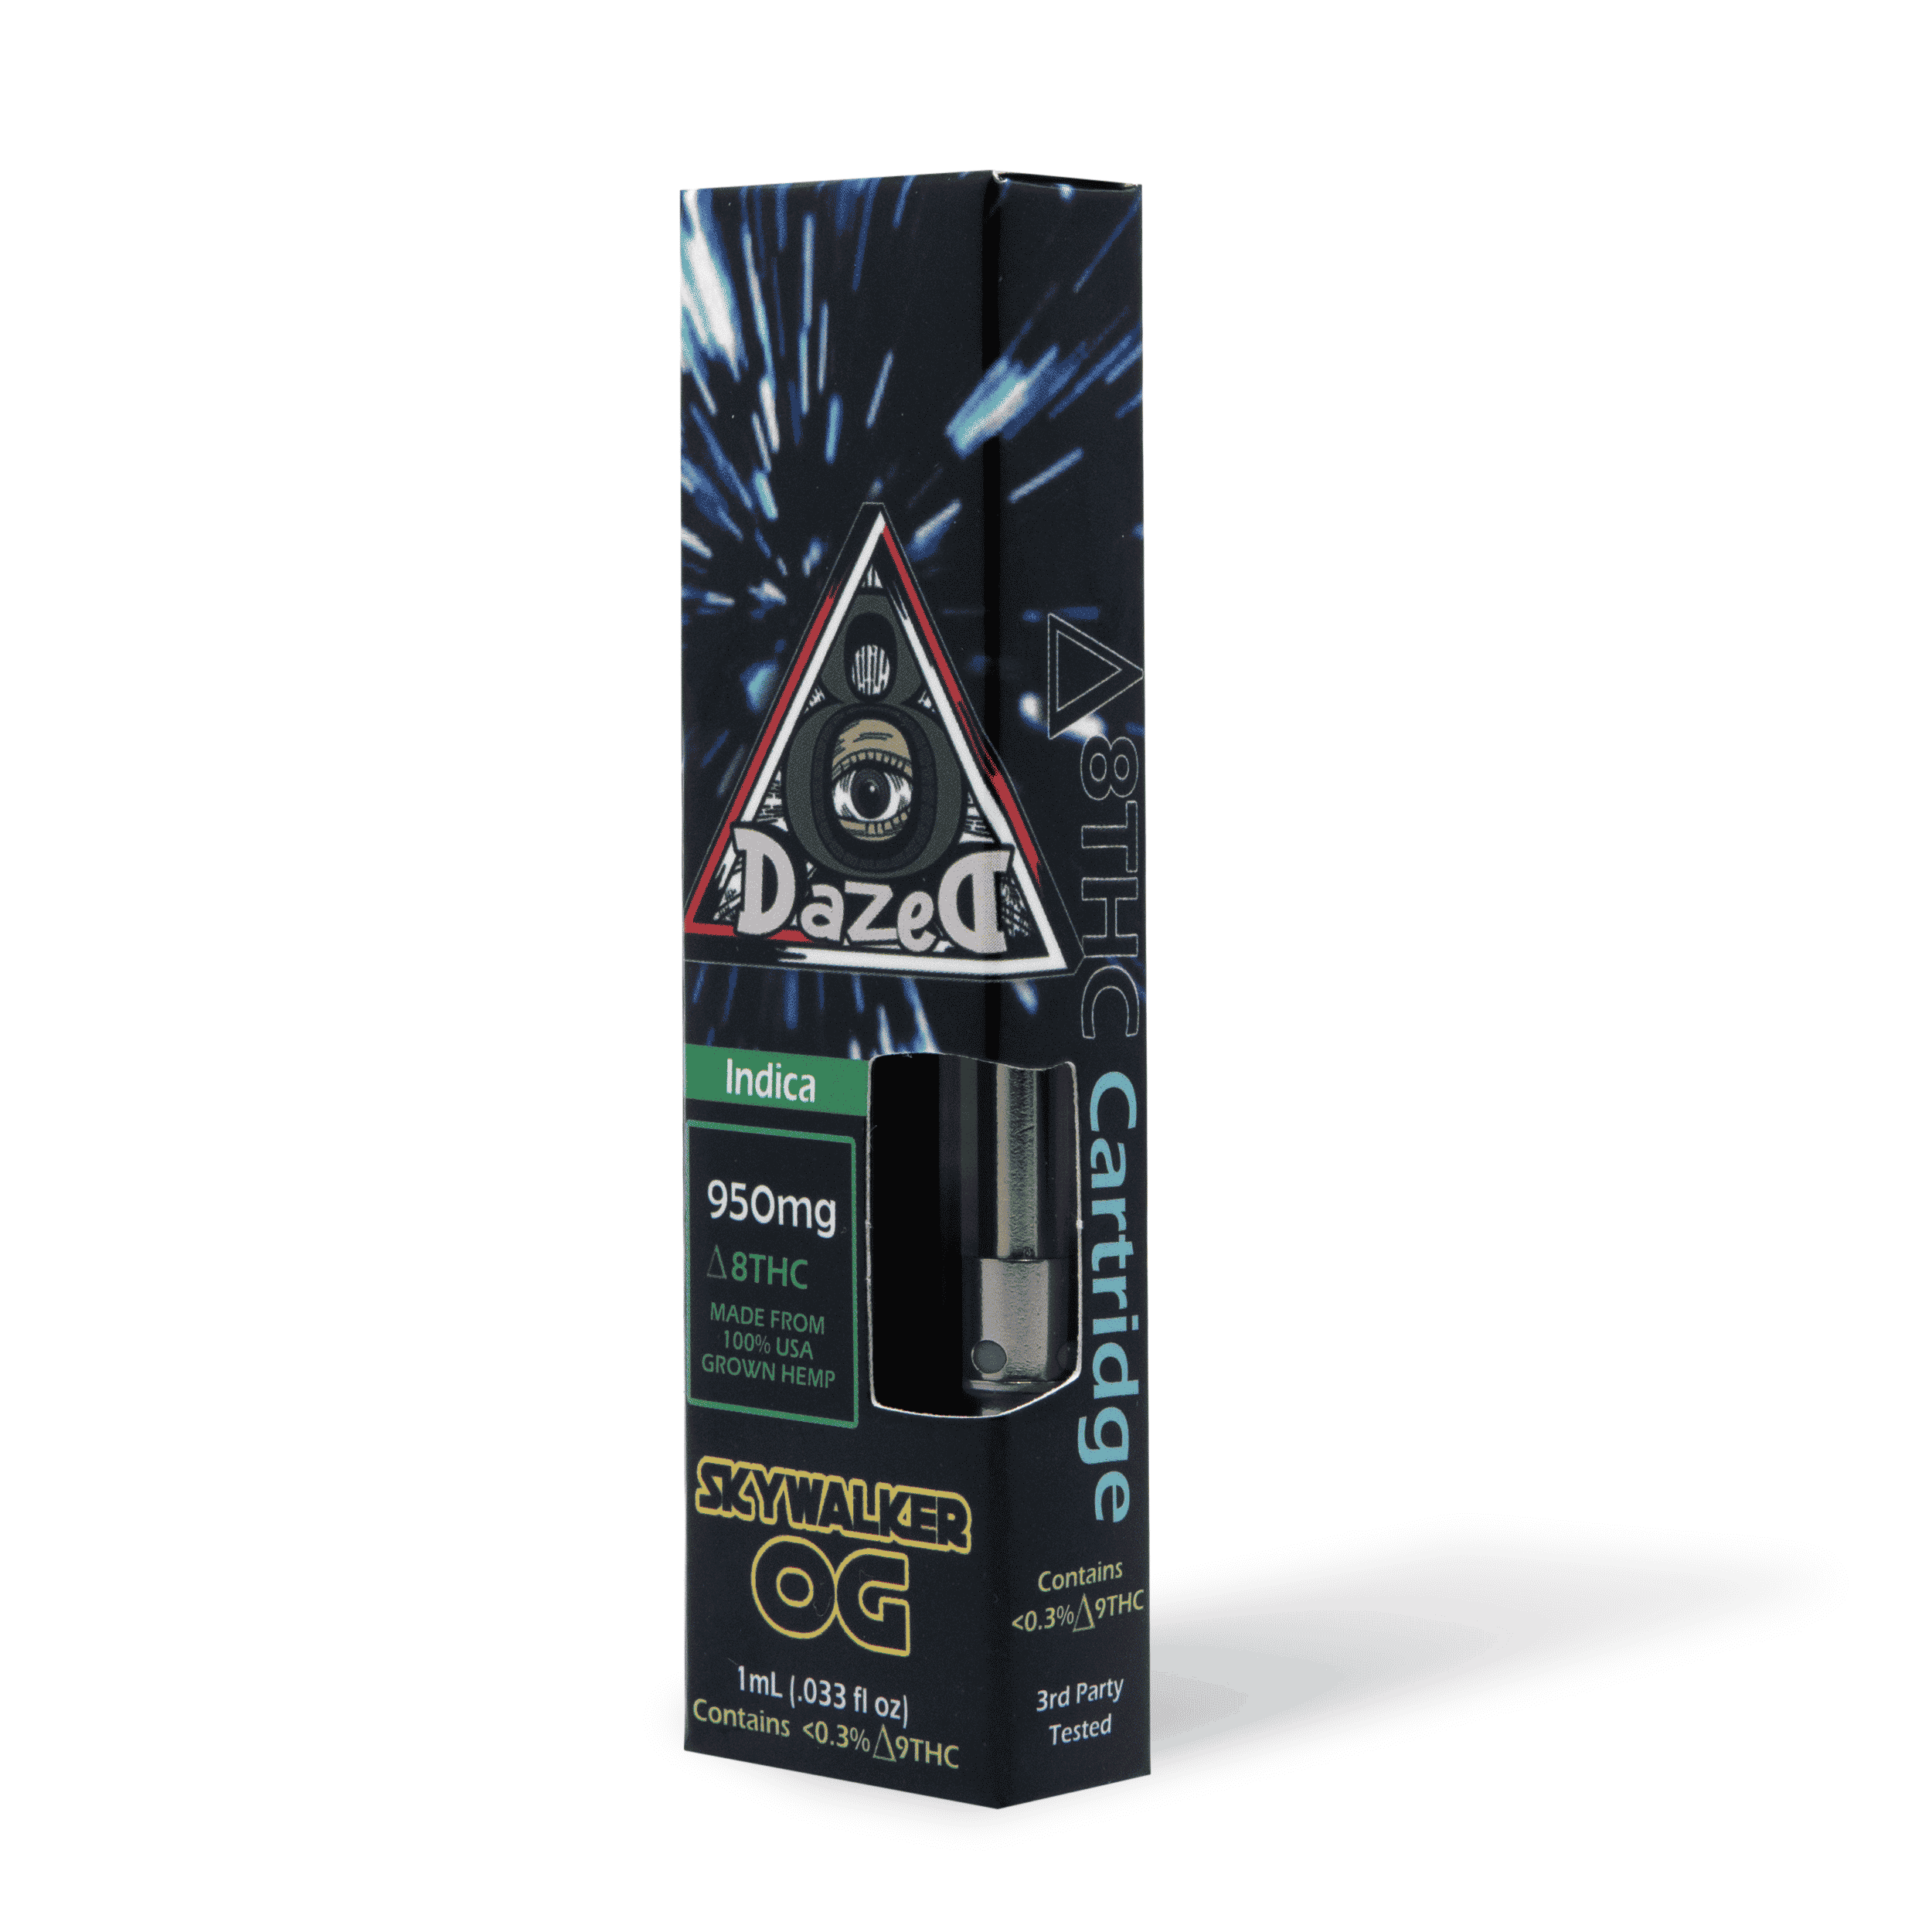 DazeD8 Skywalker OG Delta 8 Cartridge (1g) Best Price